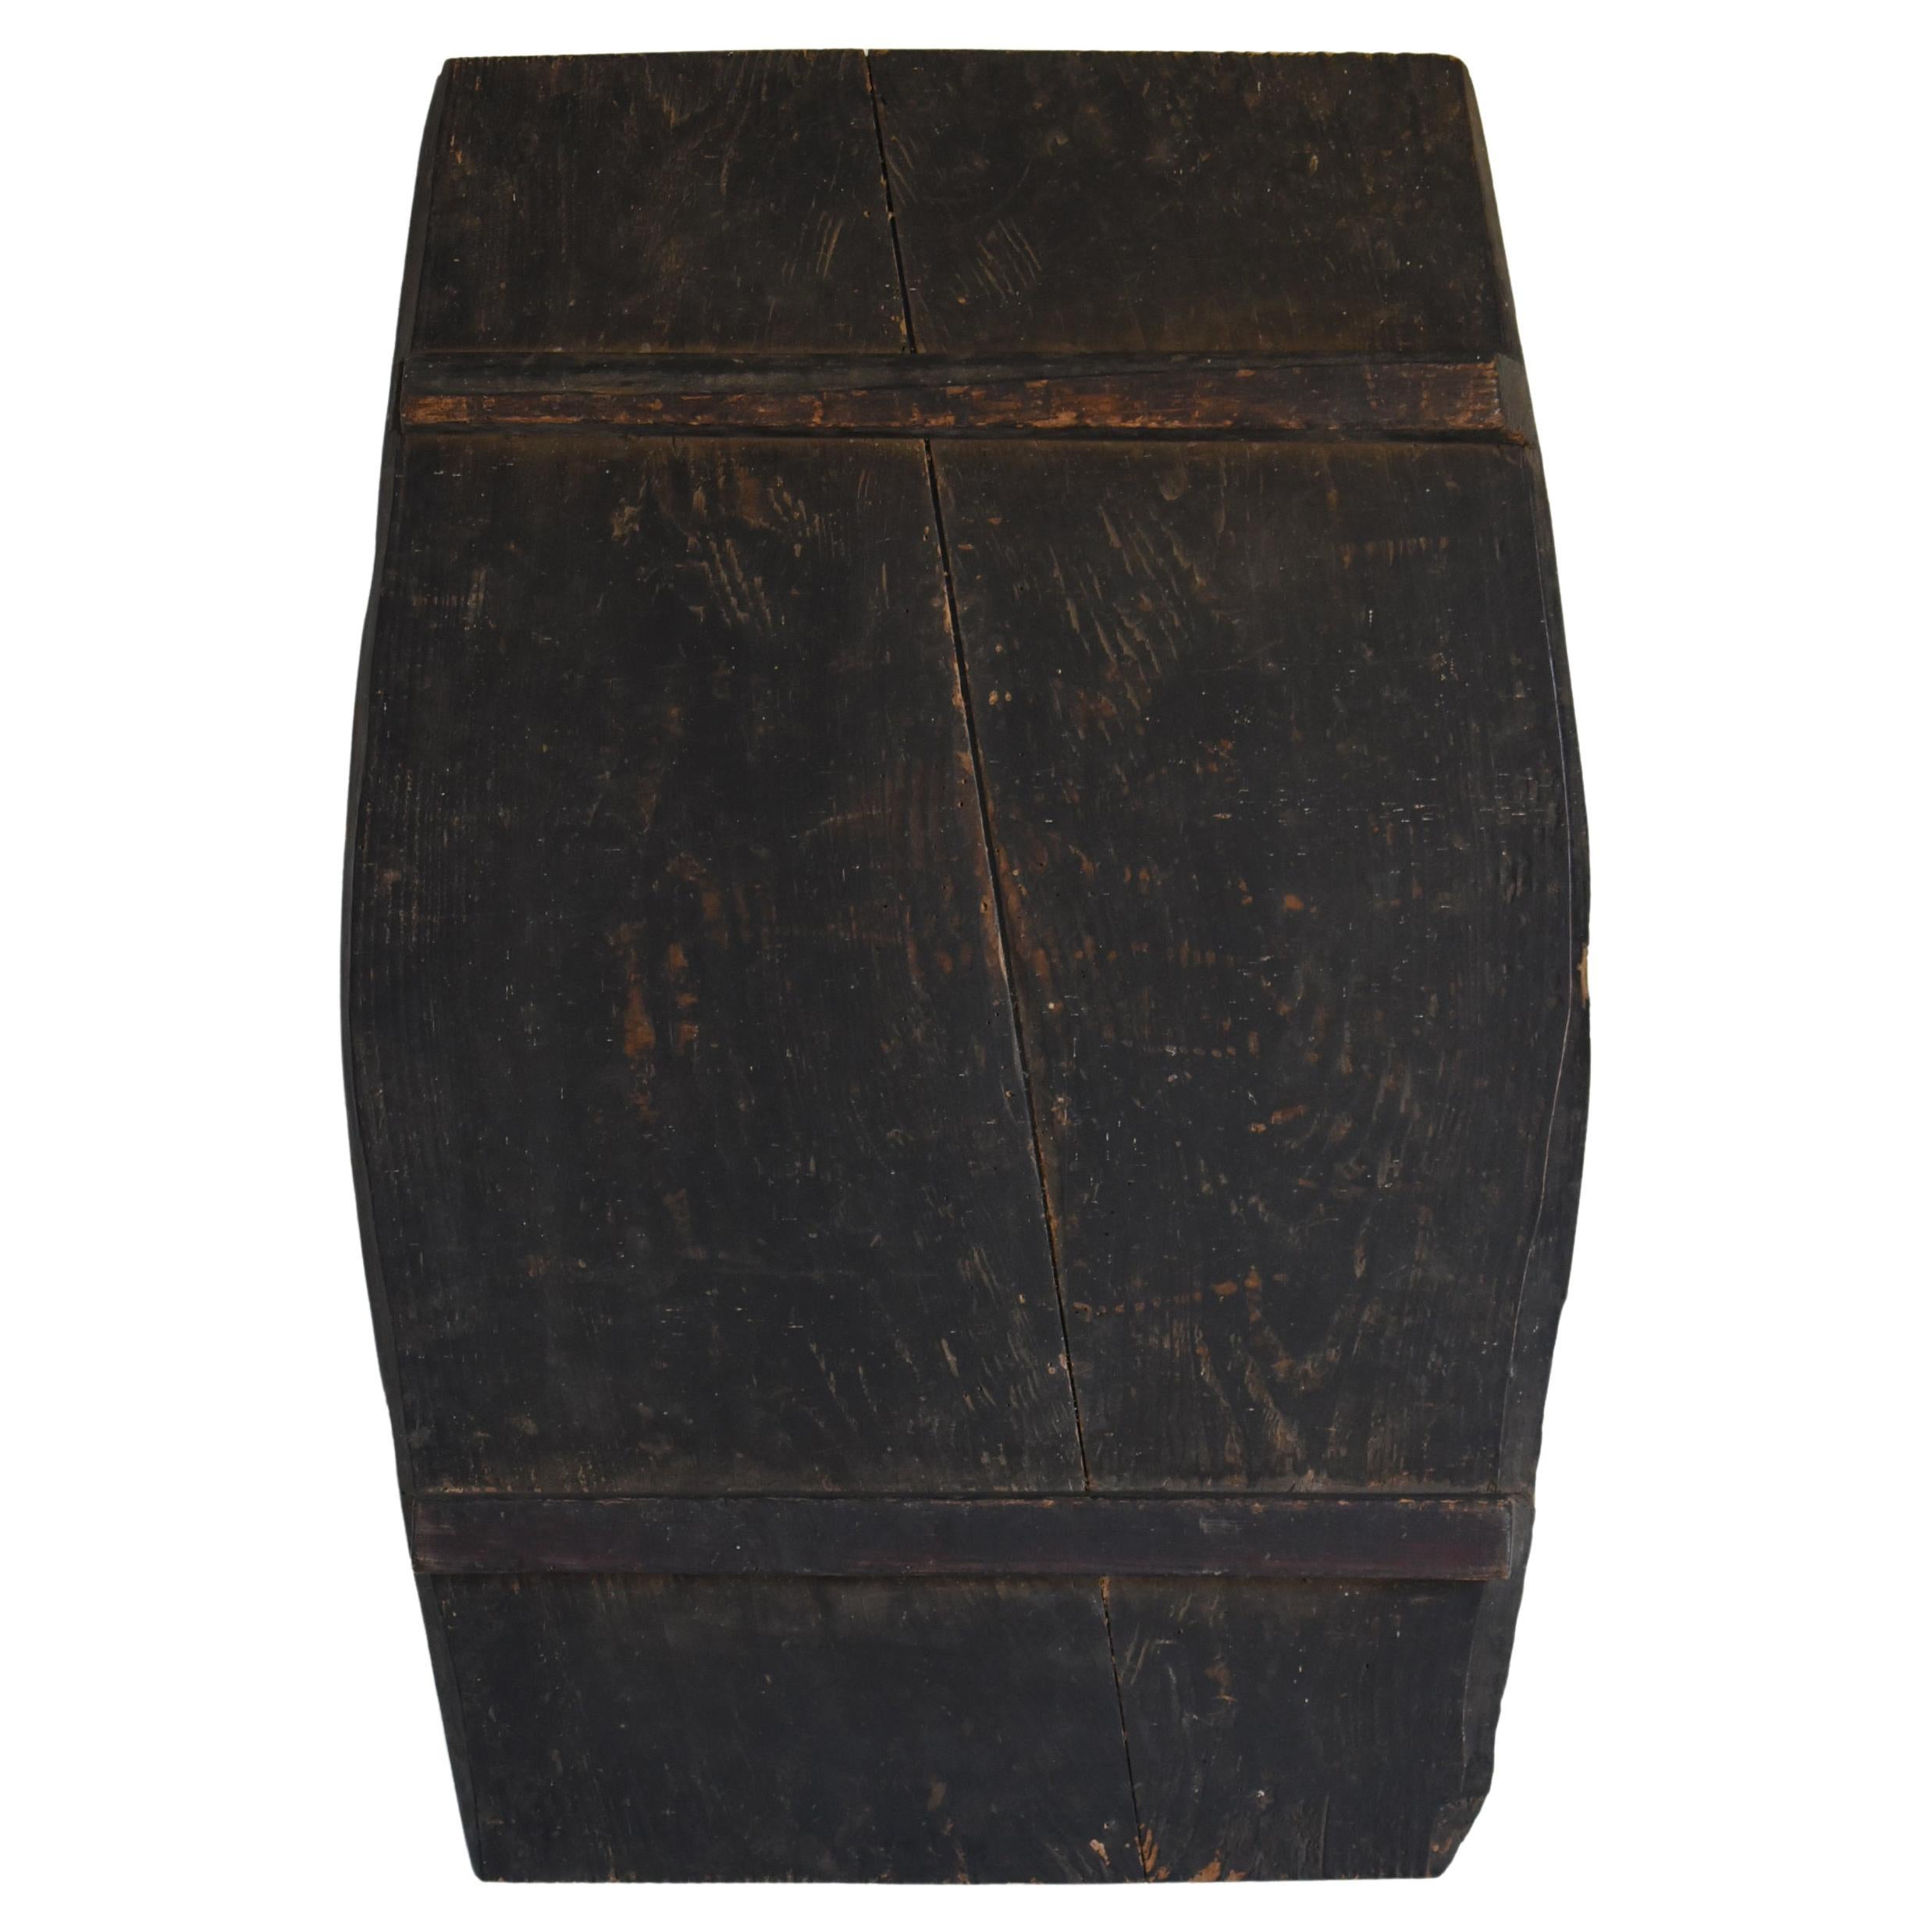 Japanese Antique Black Wooden Board 1800s-1900s/Abstract Art Wabisabi Art